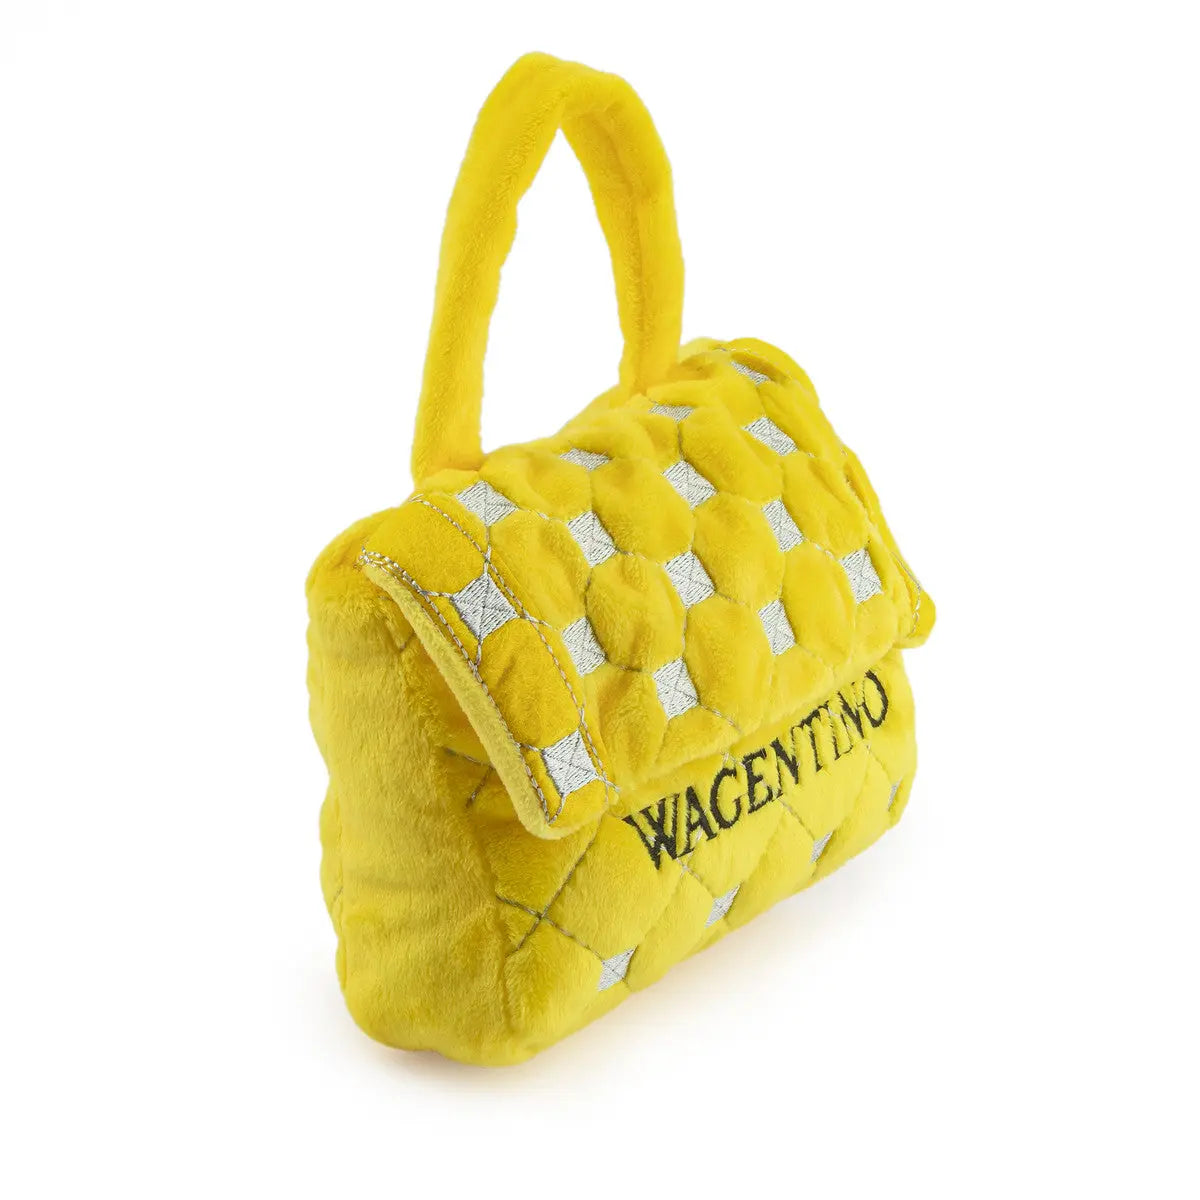 Haute Diggity Dog Wagentino Handbag Plush Dog Toys Haute Diggity Dog